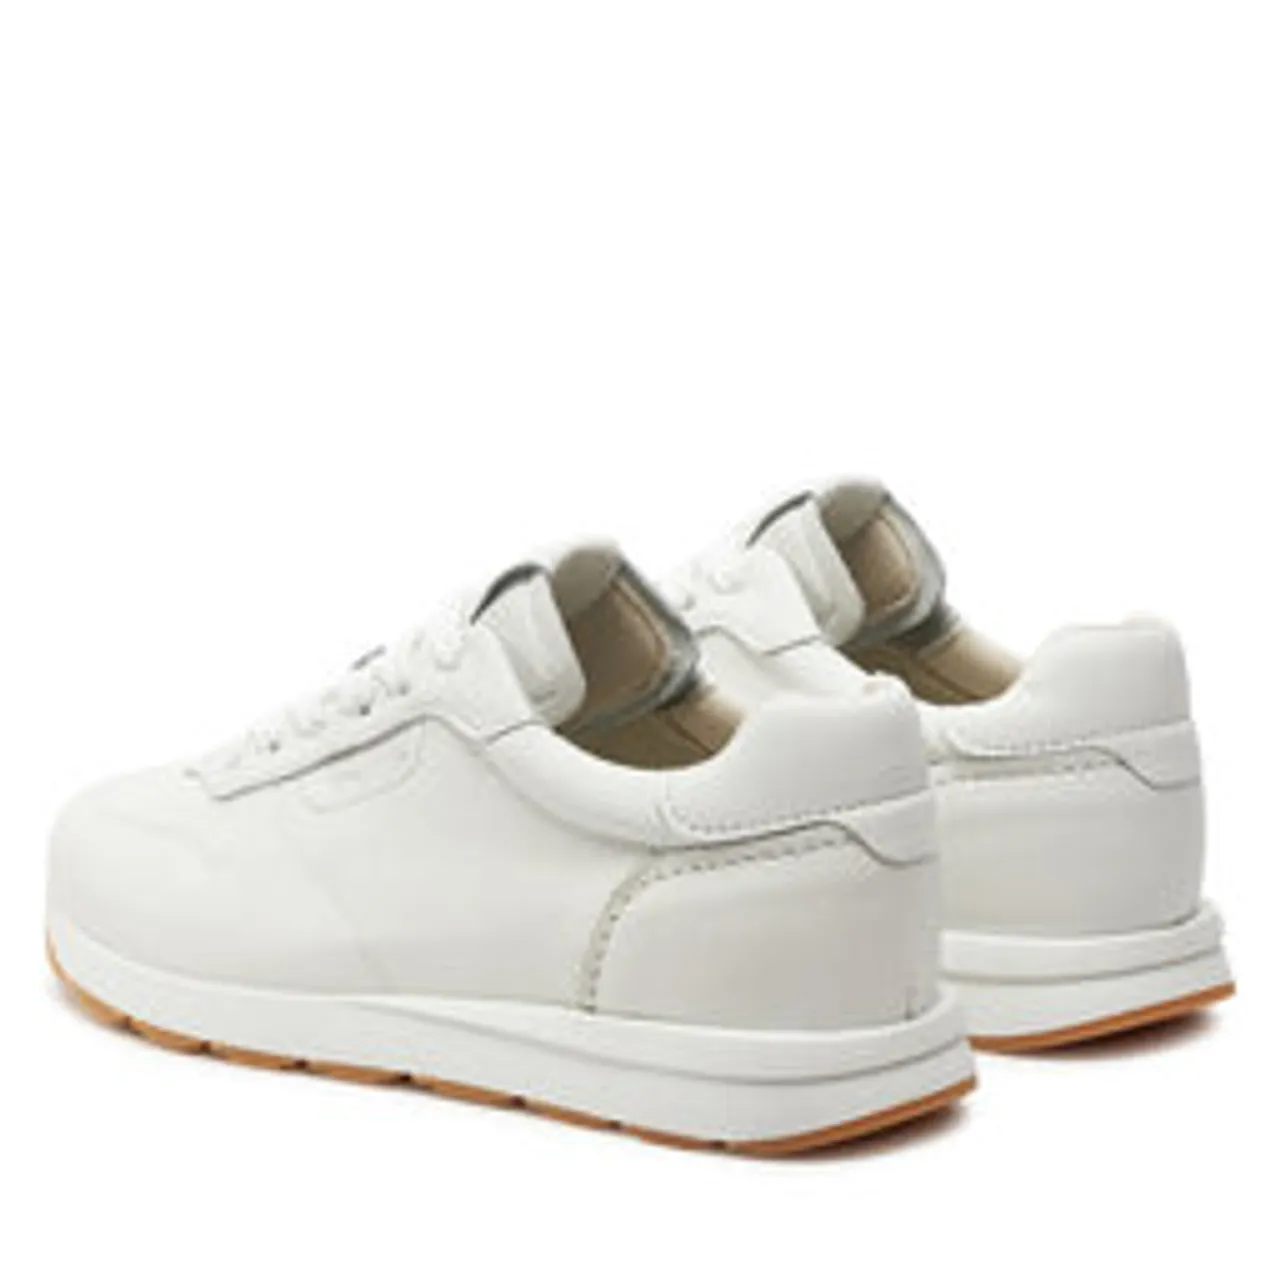 Sneakers Tamaris 1-23618-42 White Leather 117